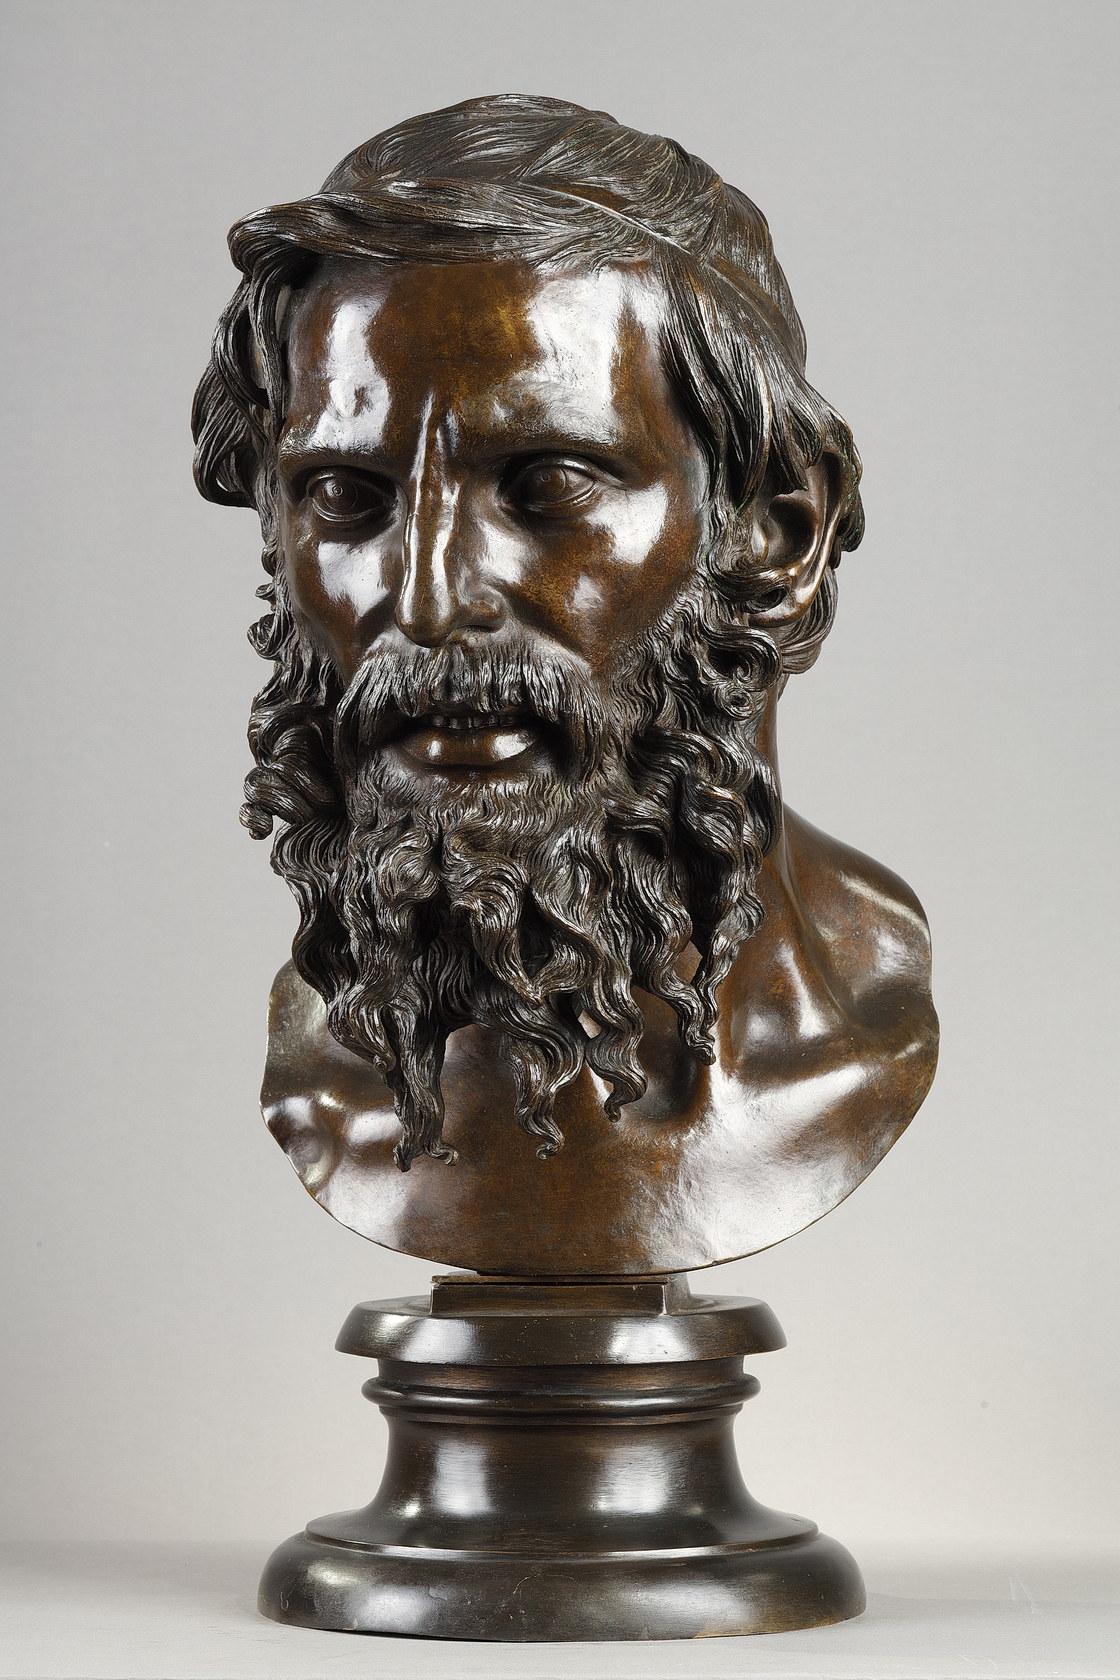 Vincenzo Gemito Figurative Sculpture - The Philosopher